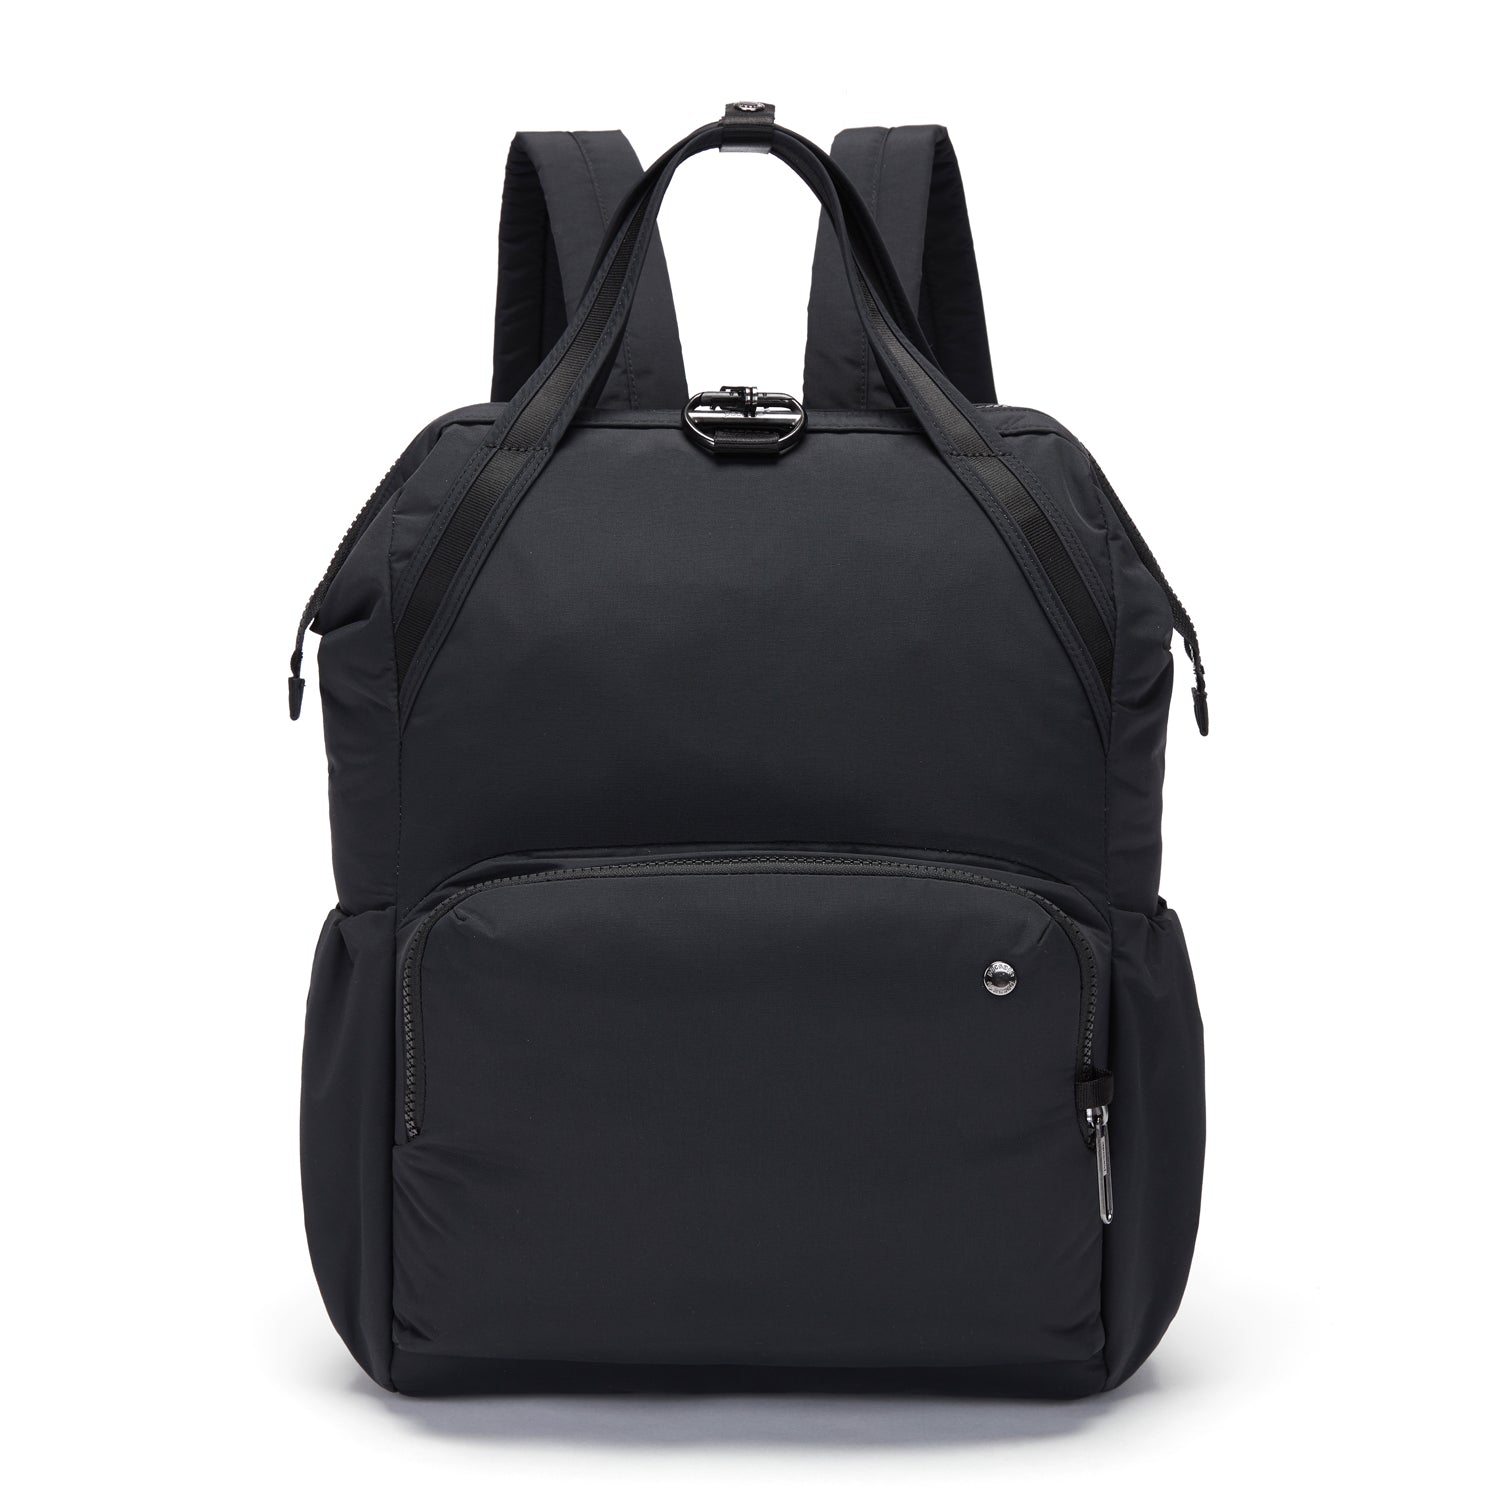 Pacsafe - CX Backpack - Black